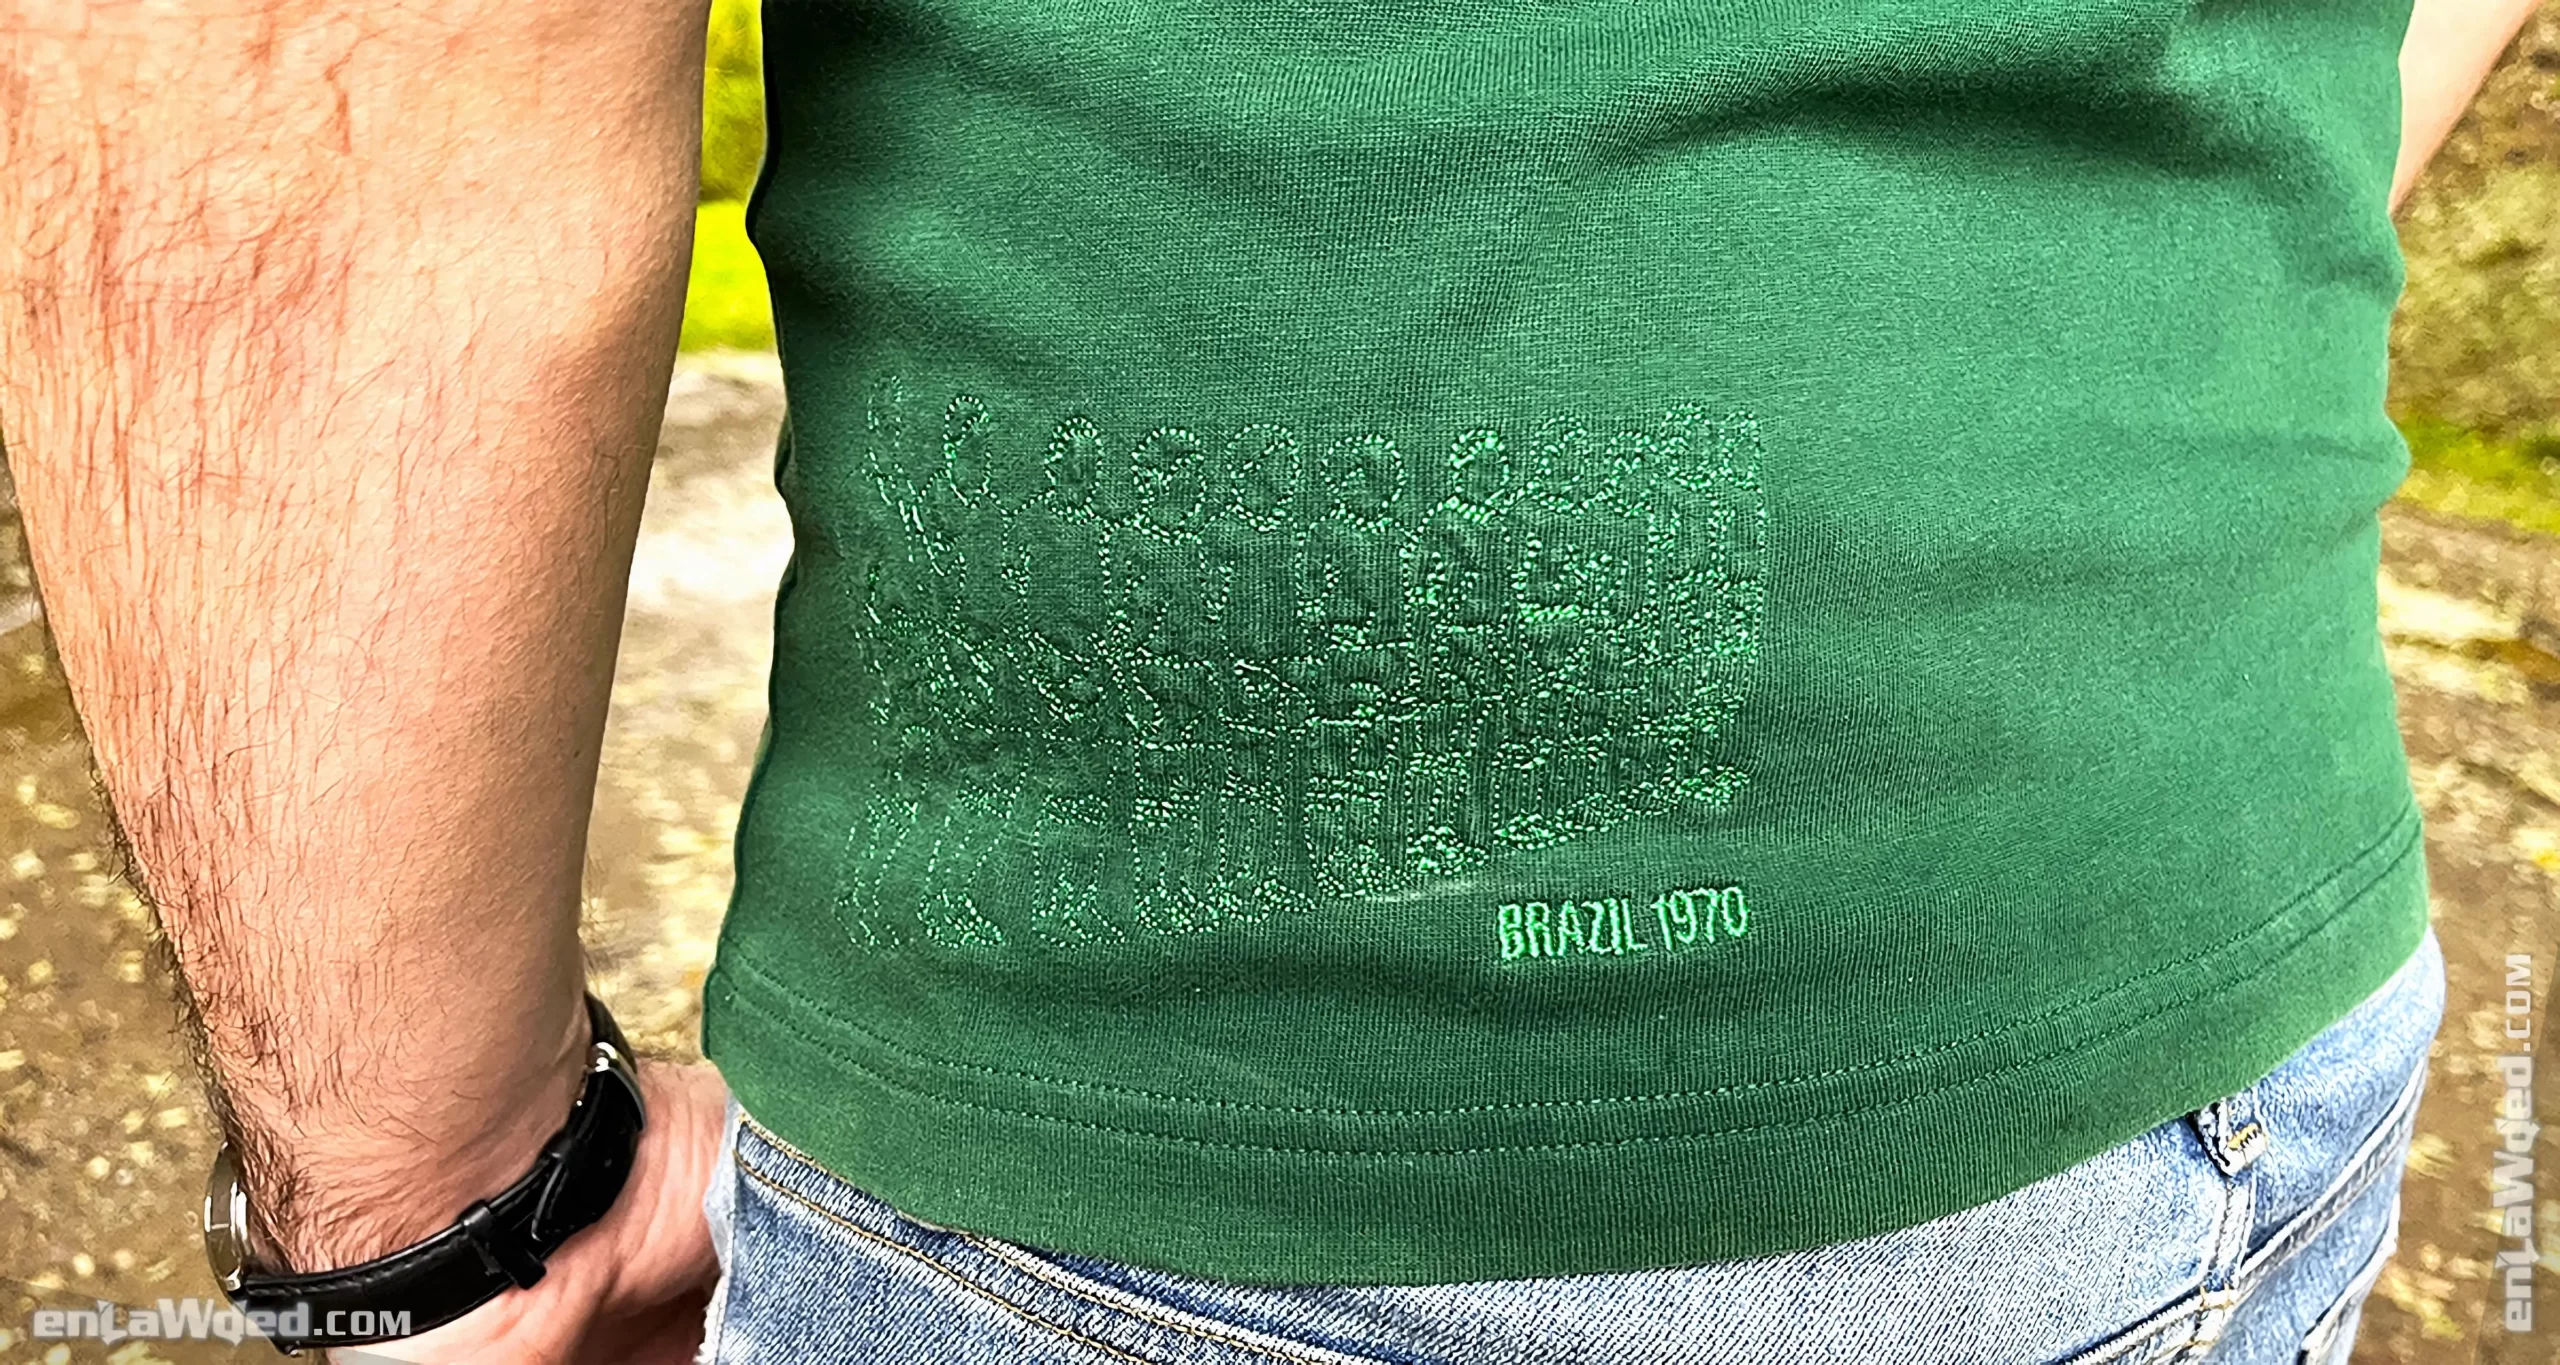 Men’s 2006 Brasil ’70 Green T-Shirt by Adidas Originals: Direct (EnLawded.com file #lp1mefzm126145dkgrsbm6xfb)